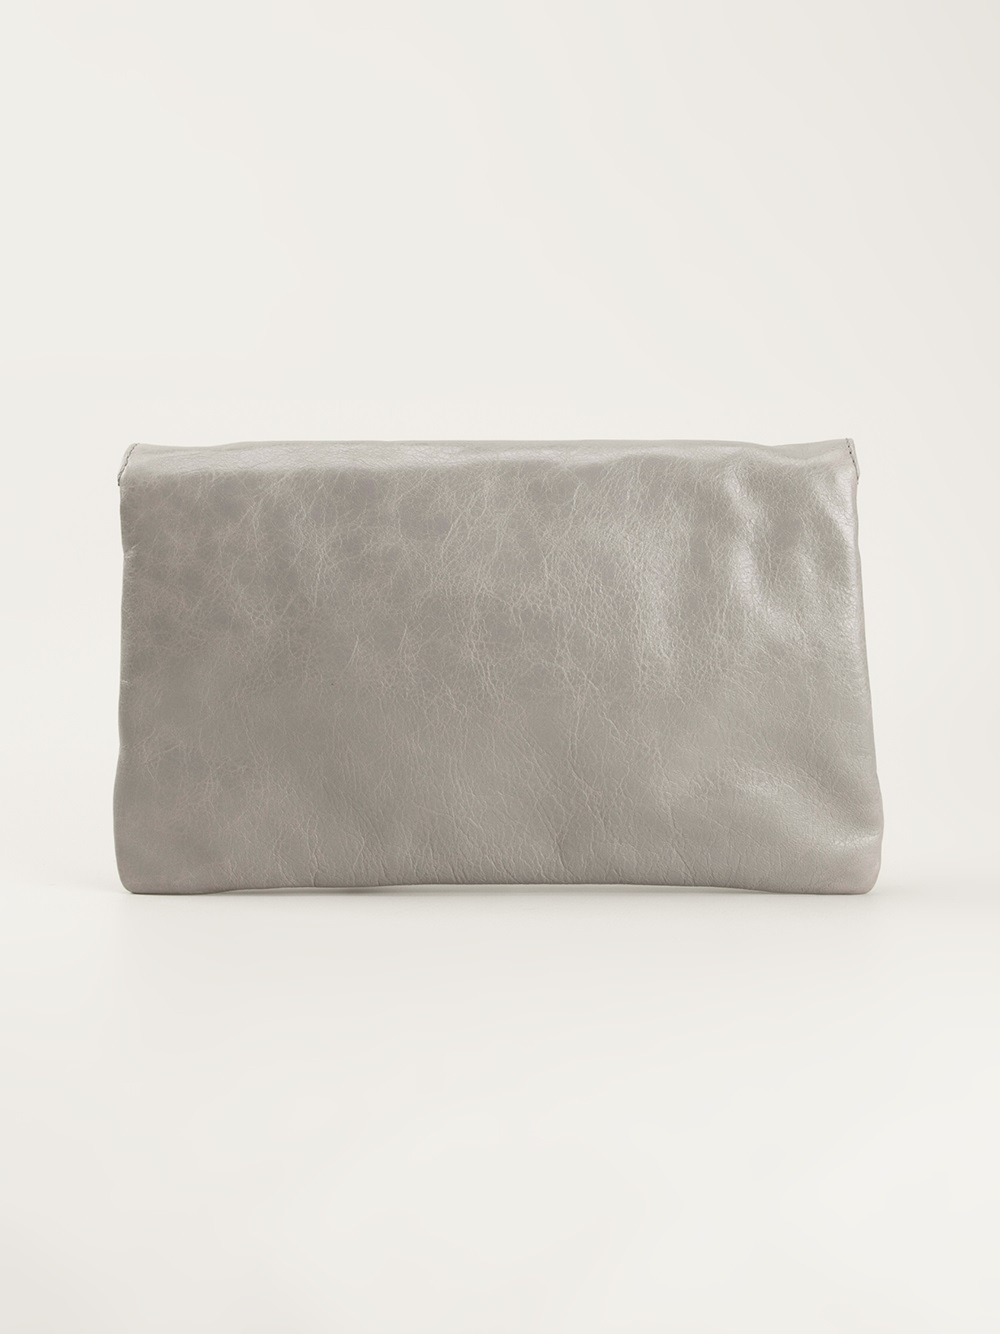 Balenciaga Classic Giant Envelope Clutch in Grey (Gray) | Lyst